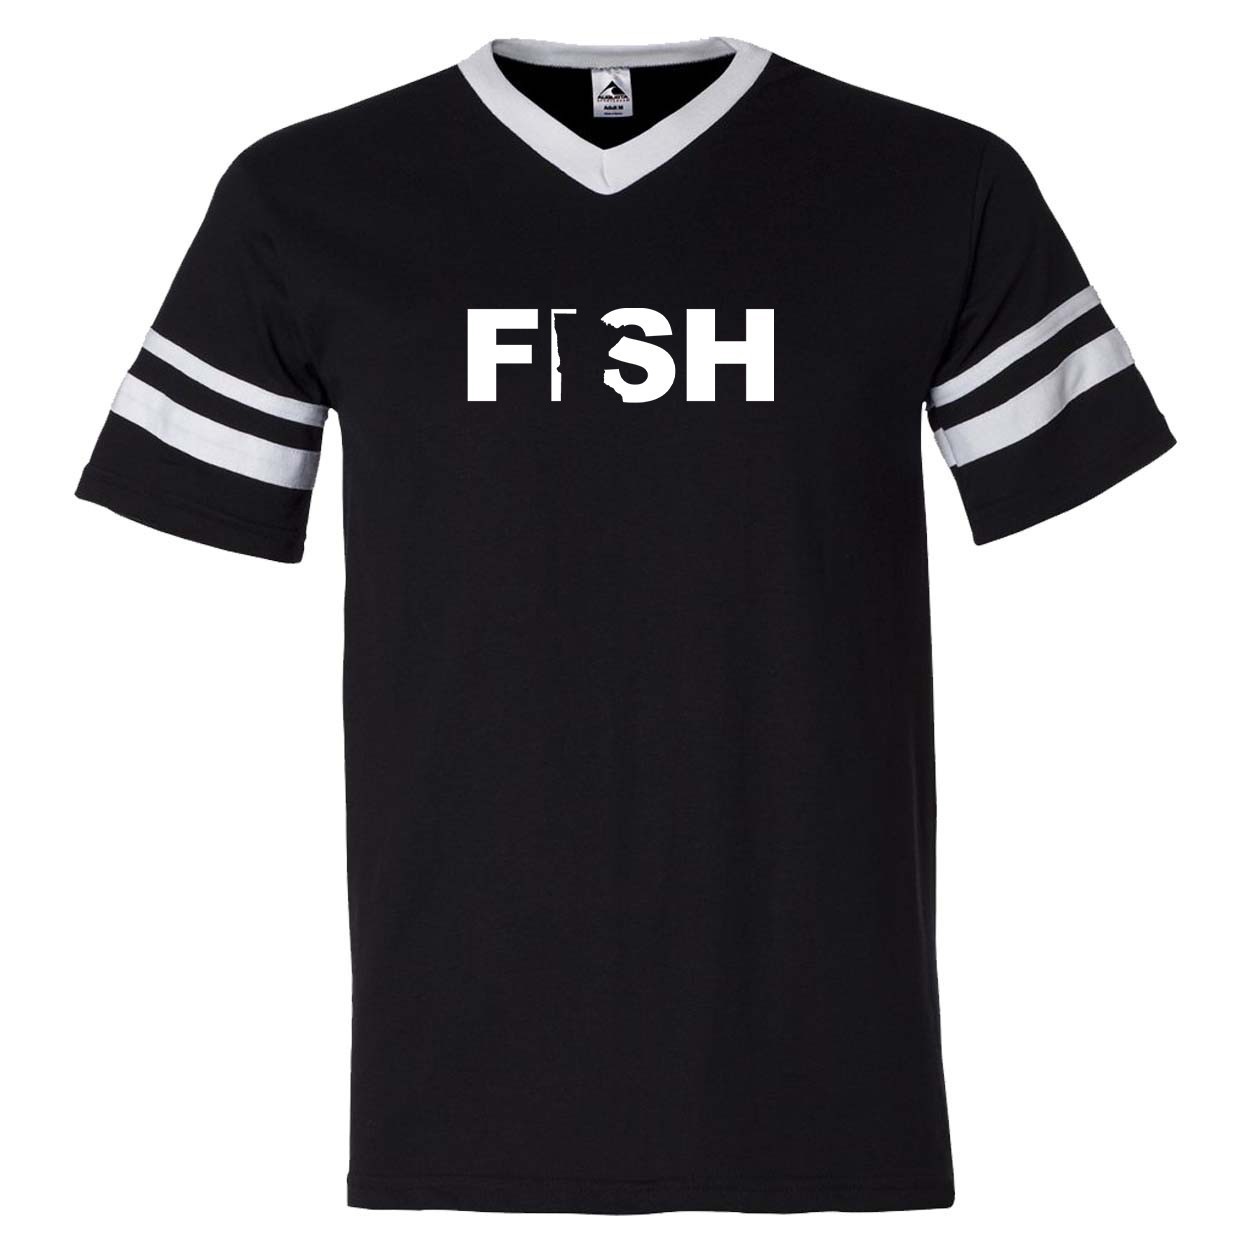 Fish Minnesota Classic Premium Striped Jersey T-Shirt Black/White (White Logo)